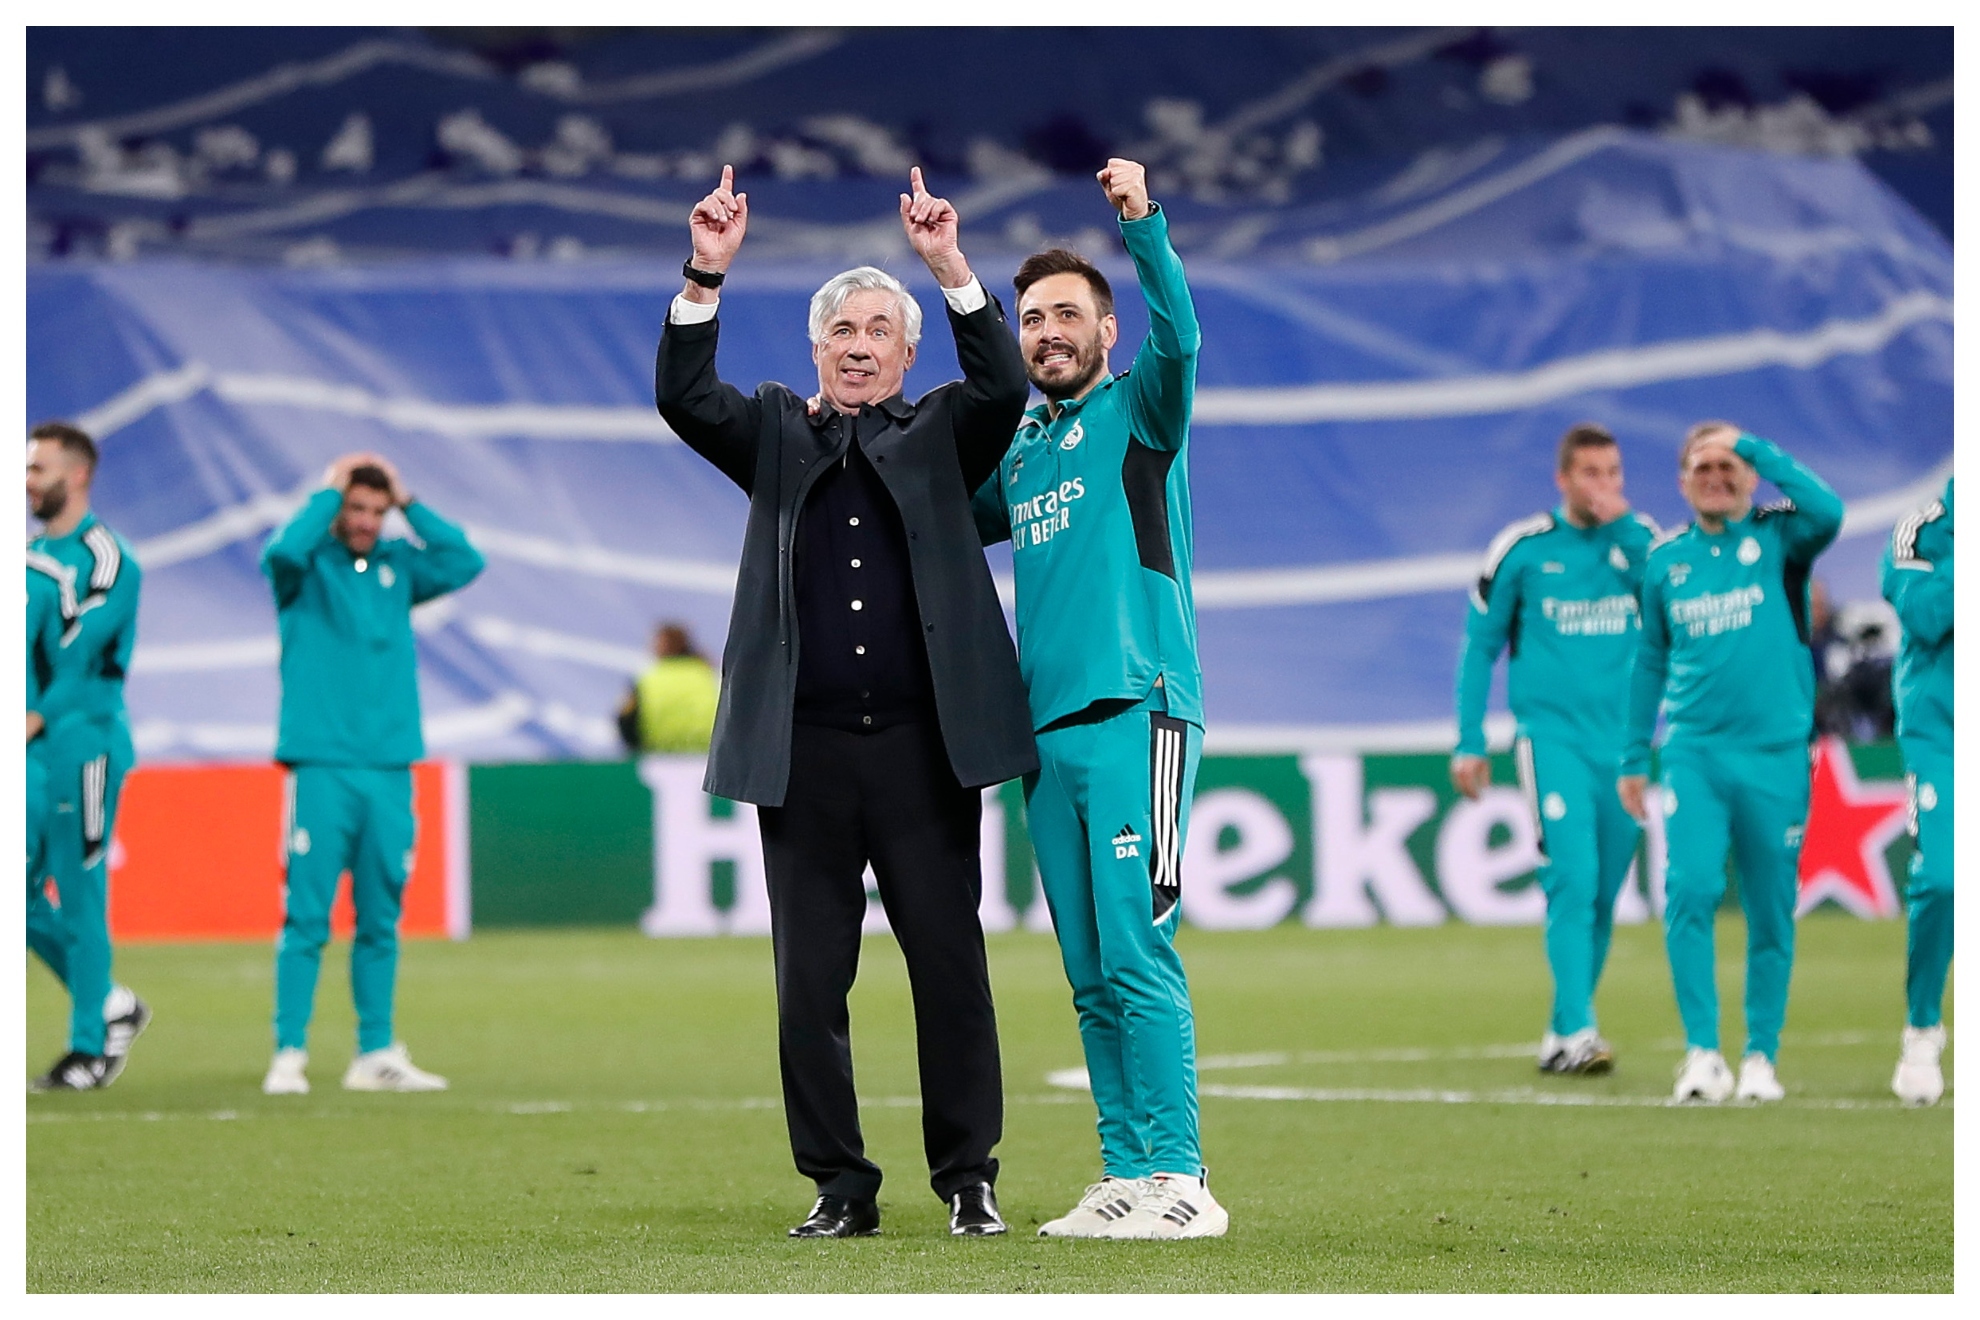 Carlo y Davide Ancelotti celebran la remontada al Manchester City/ANGEL RIVERO